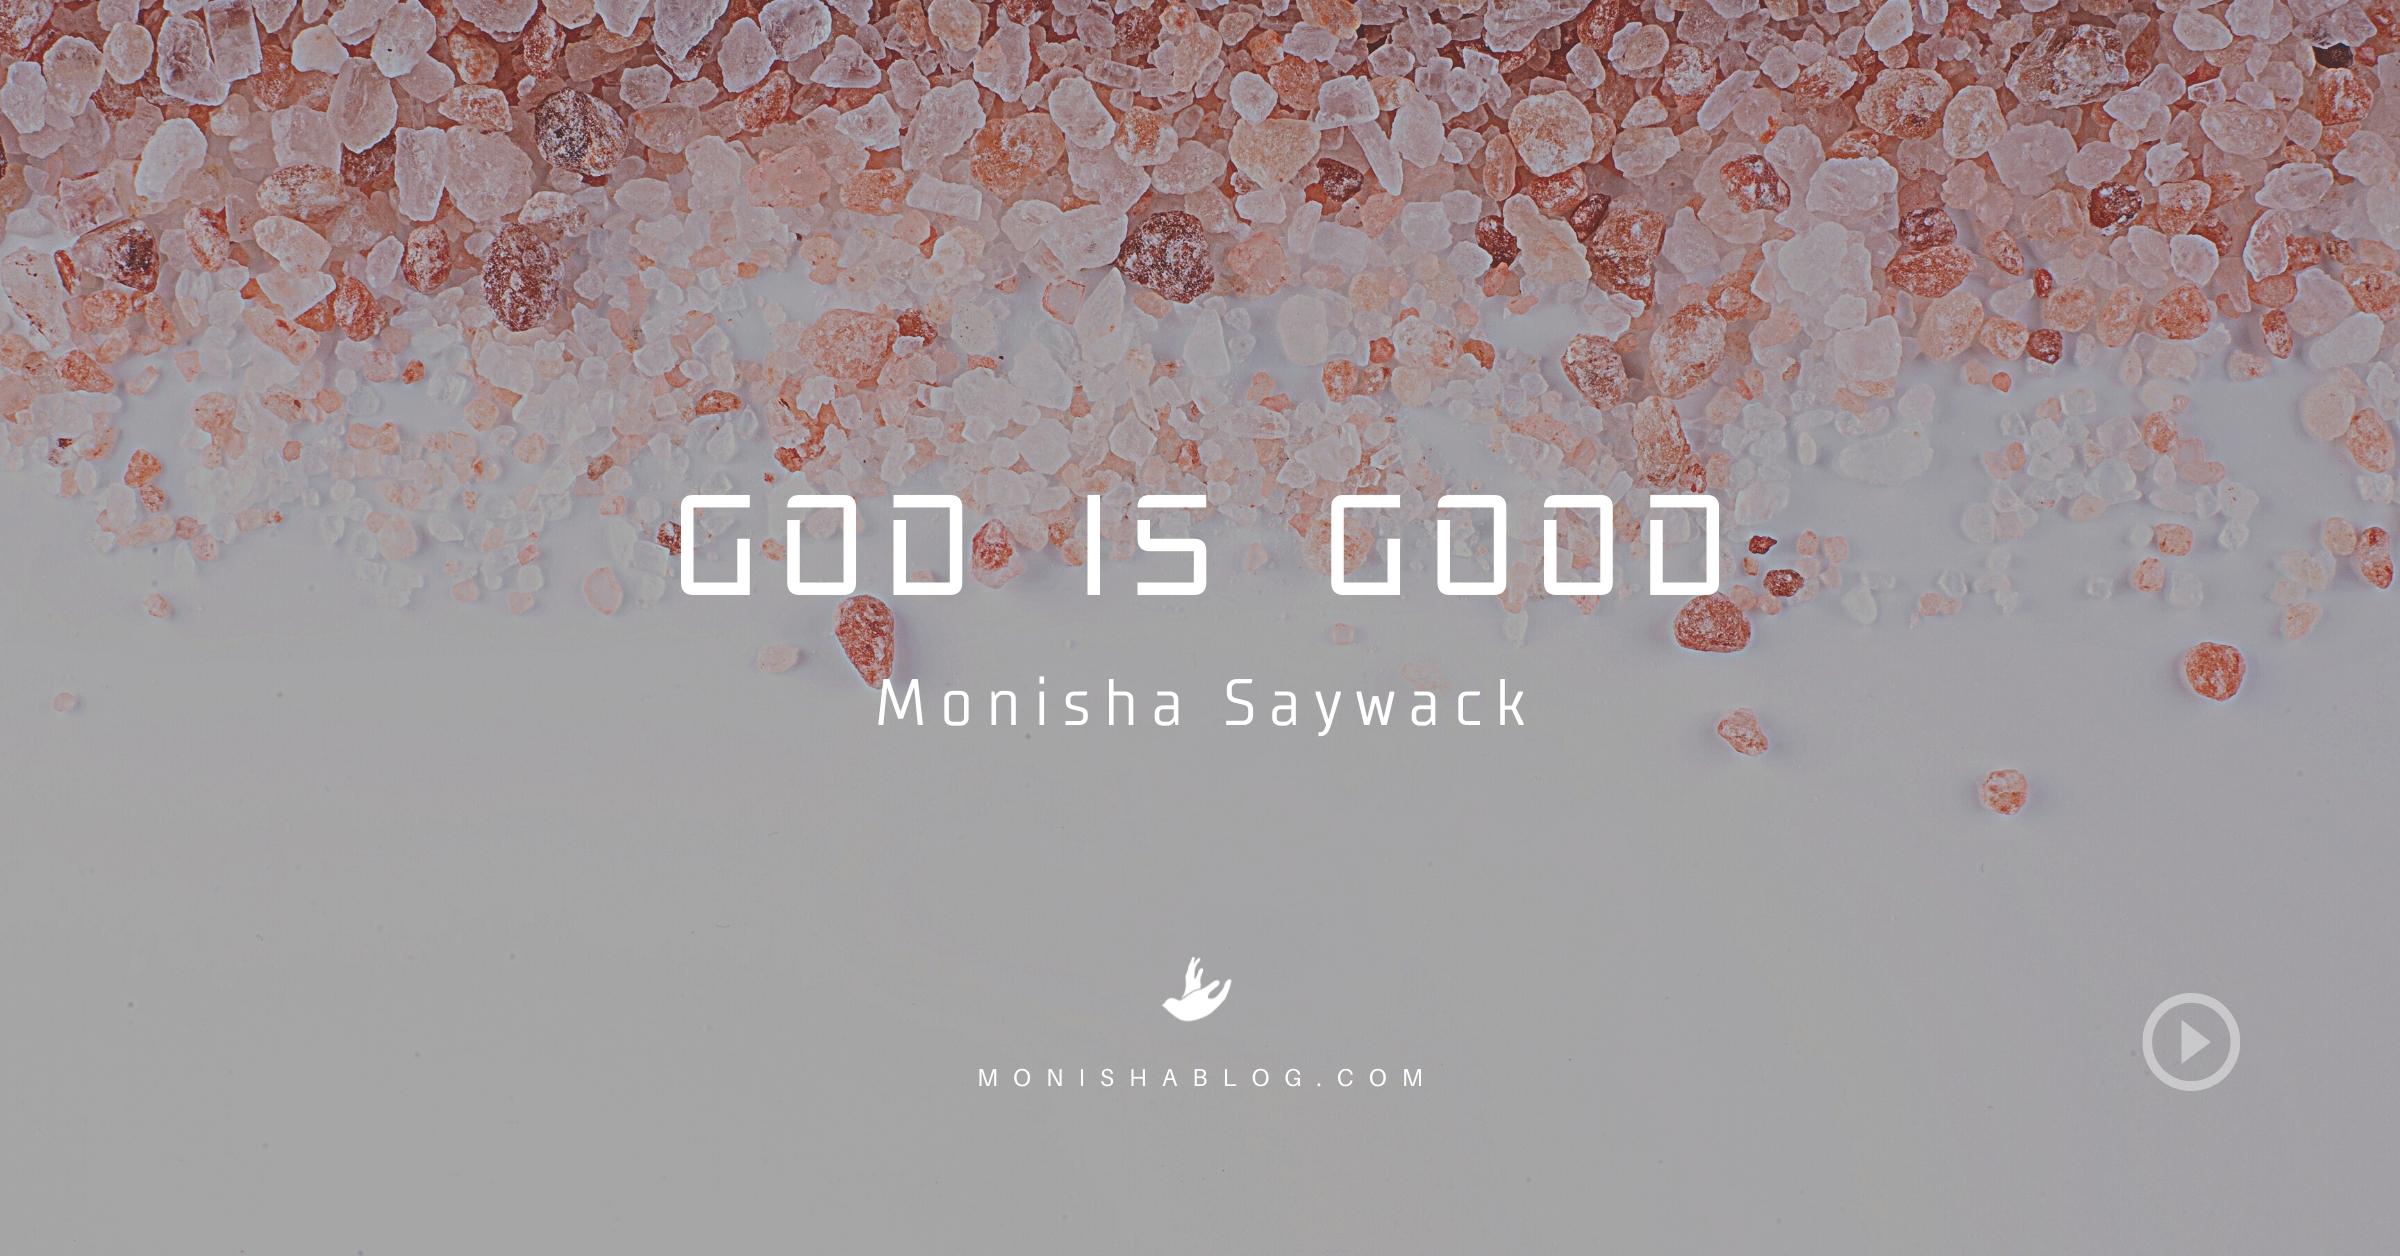 New Music - God Is Good by Monisha Saywack